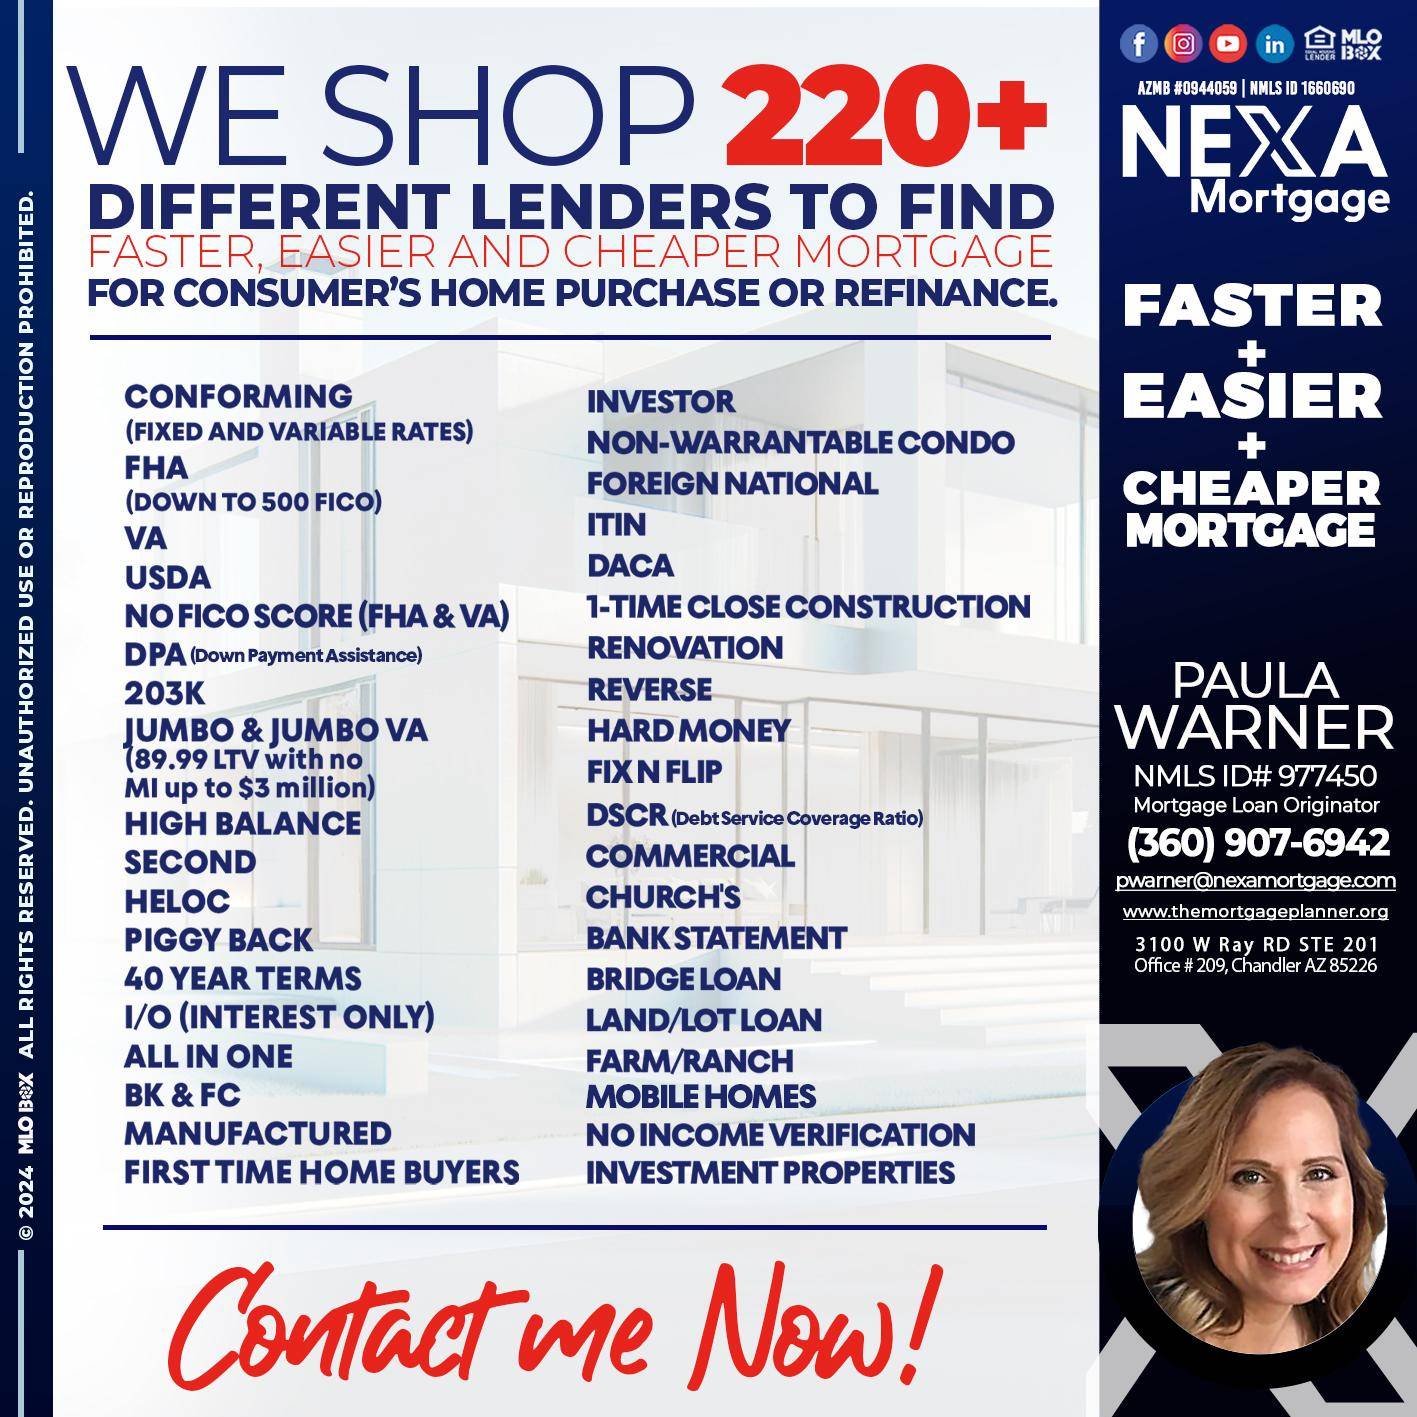 WE SHOP 220 - Paula Warner -Mortgage Loan Originator